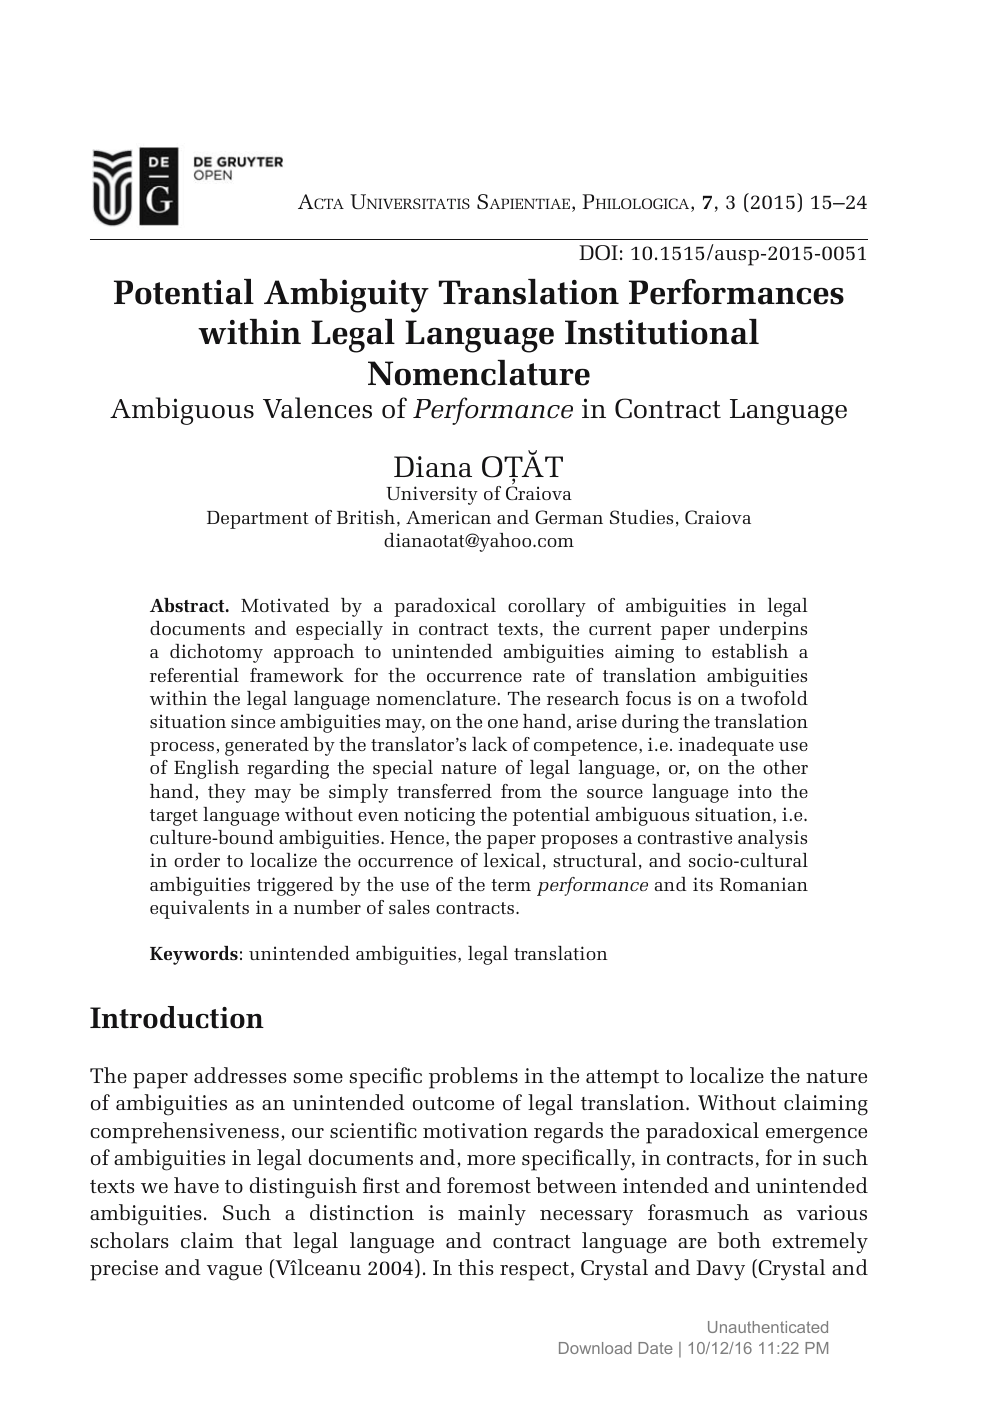 Potential Ambiguity Translation Performances Within Legal Language